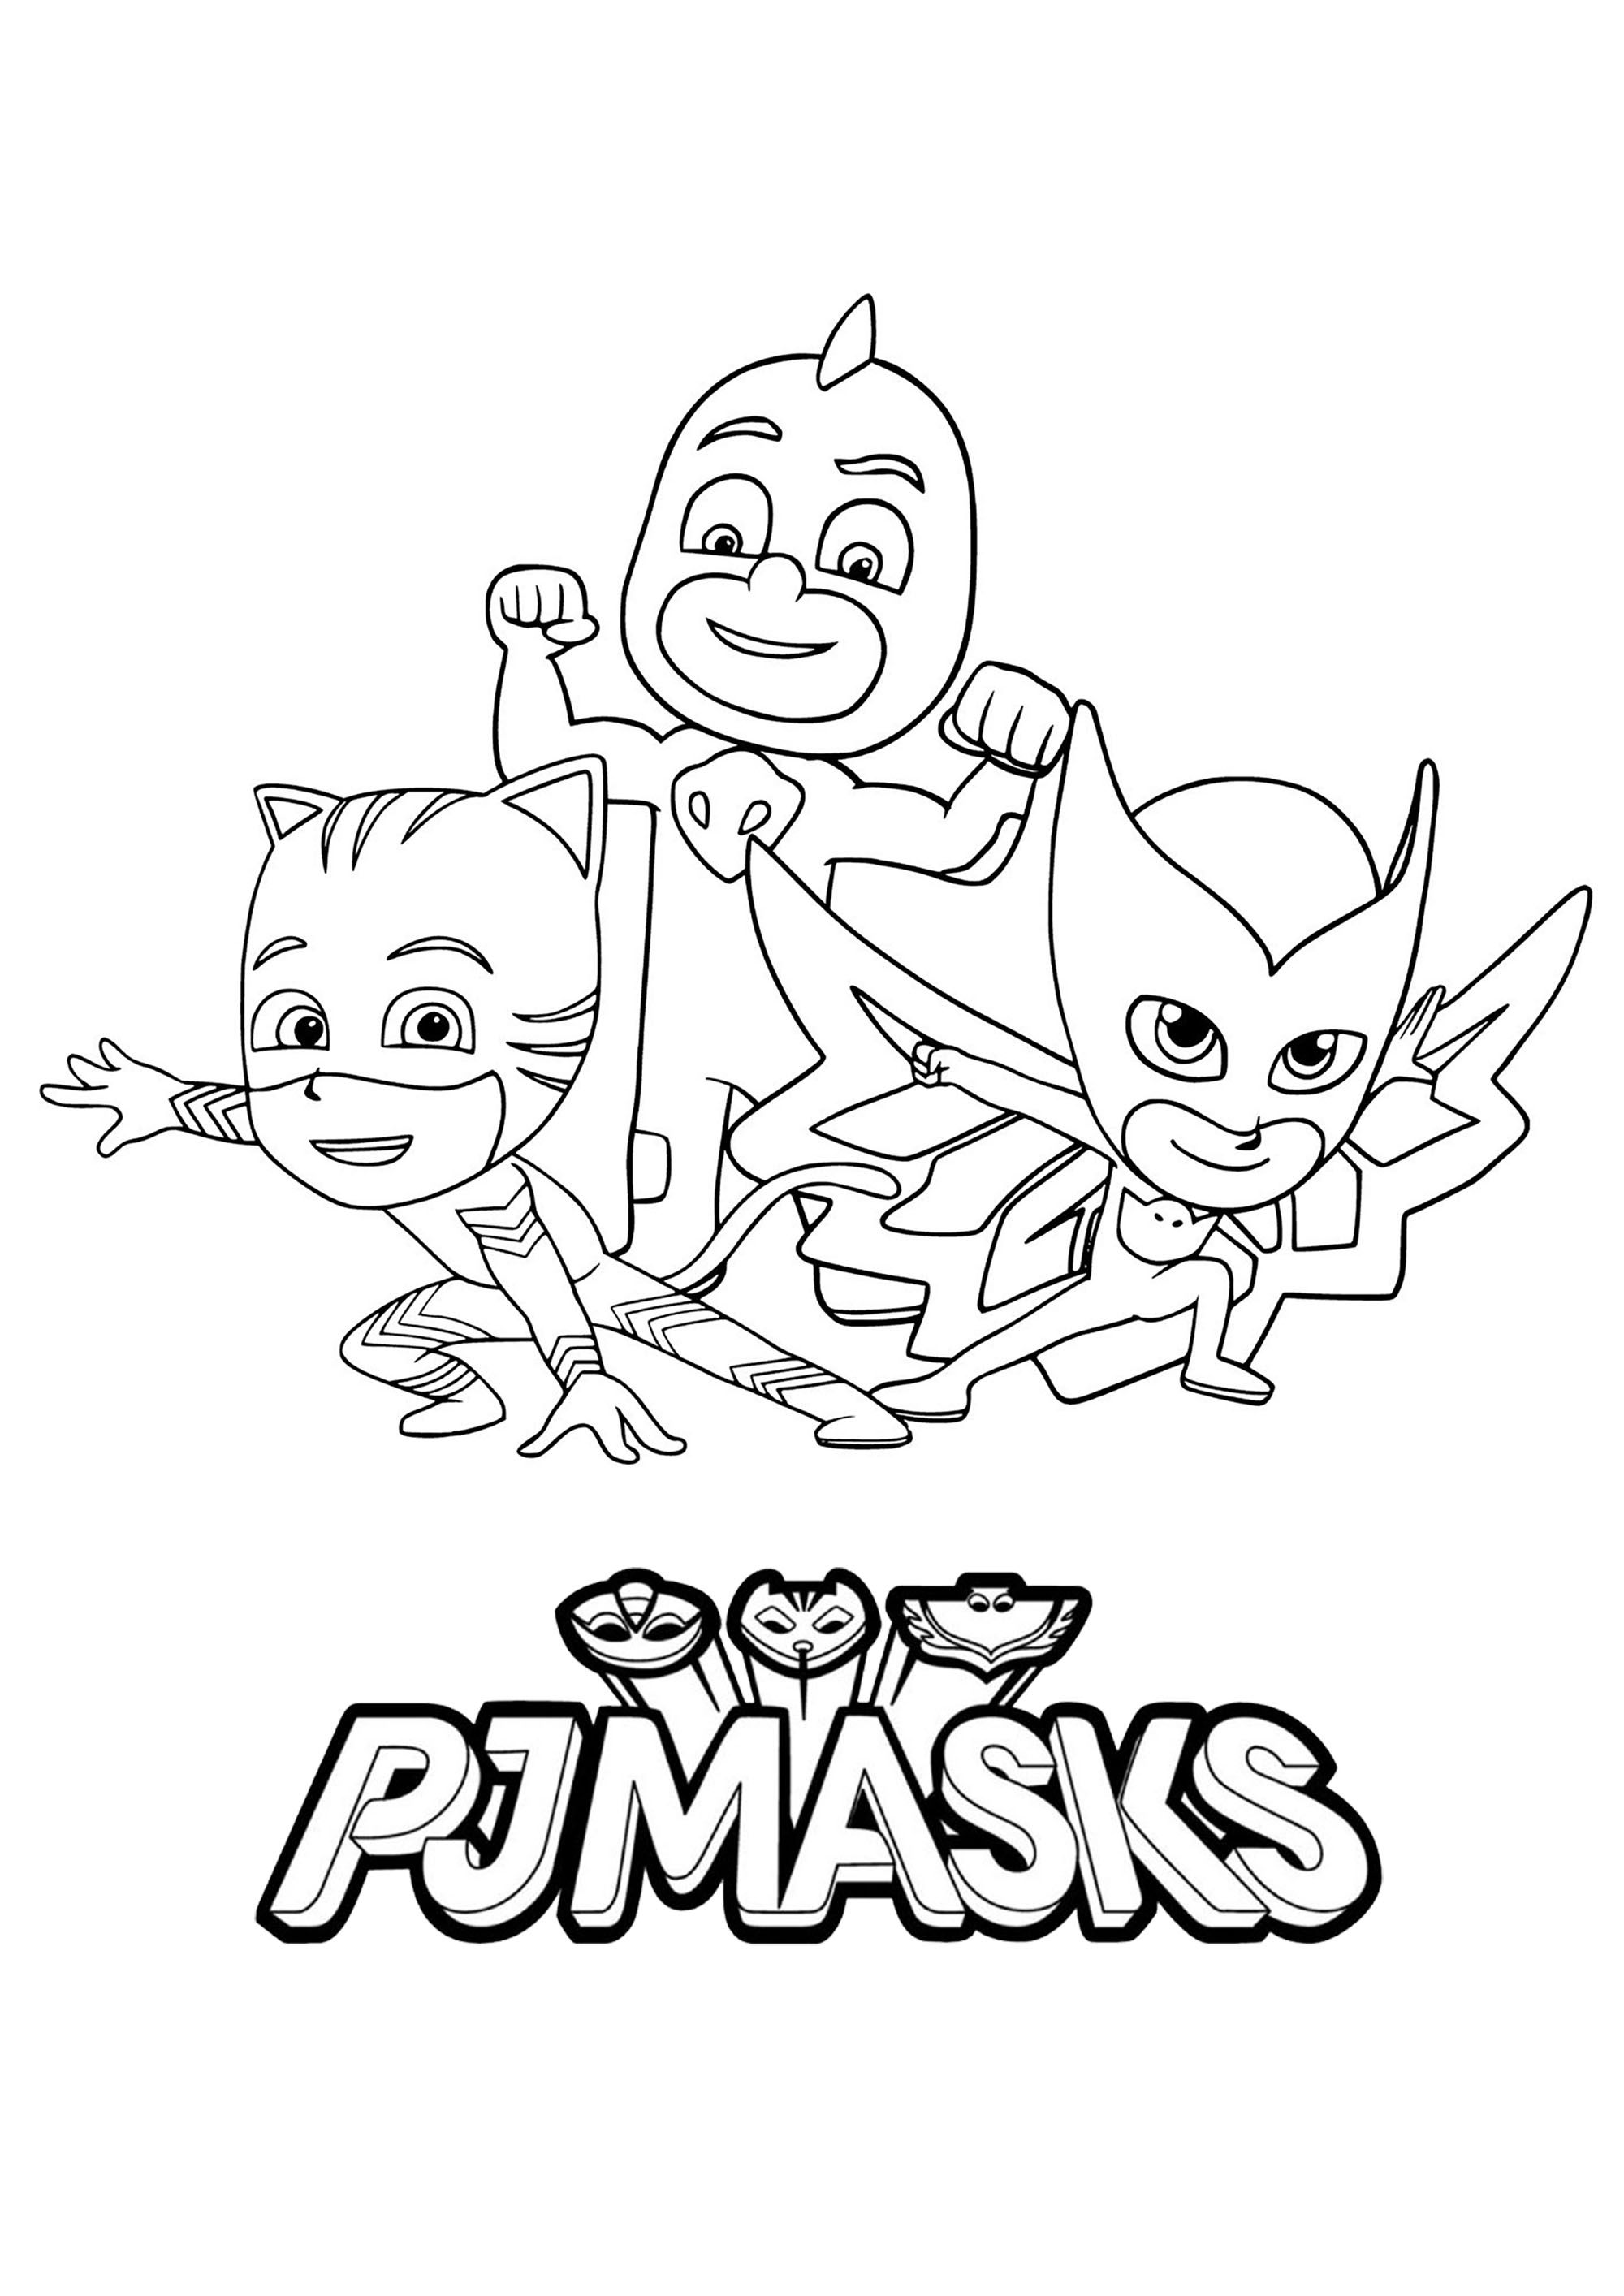 PJ Masks: easy coloring with logo - PJ Masks Kids Coloring Pages